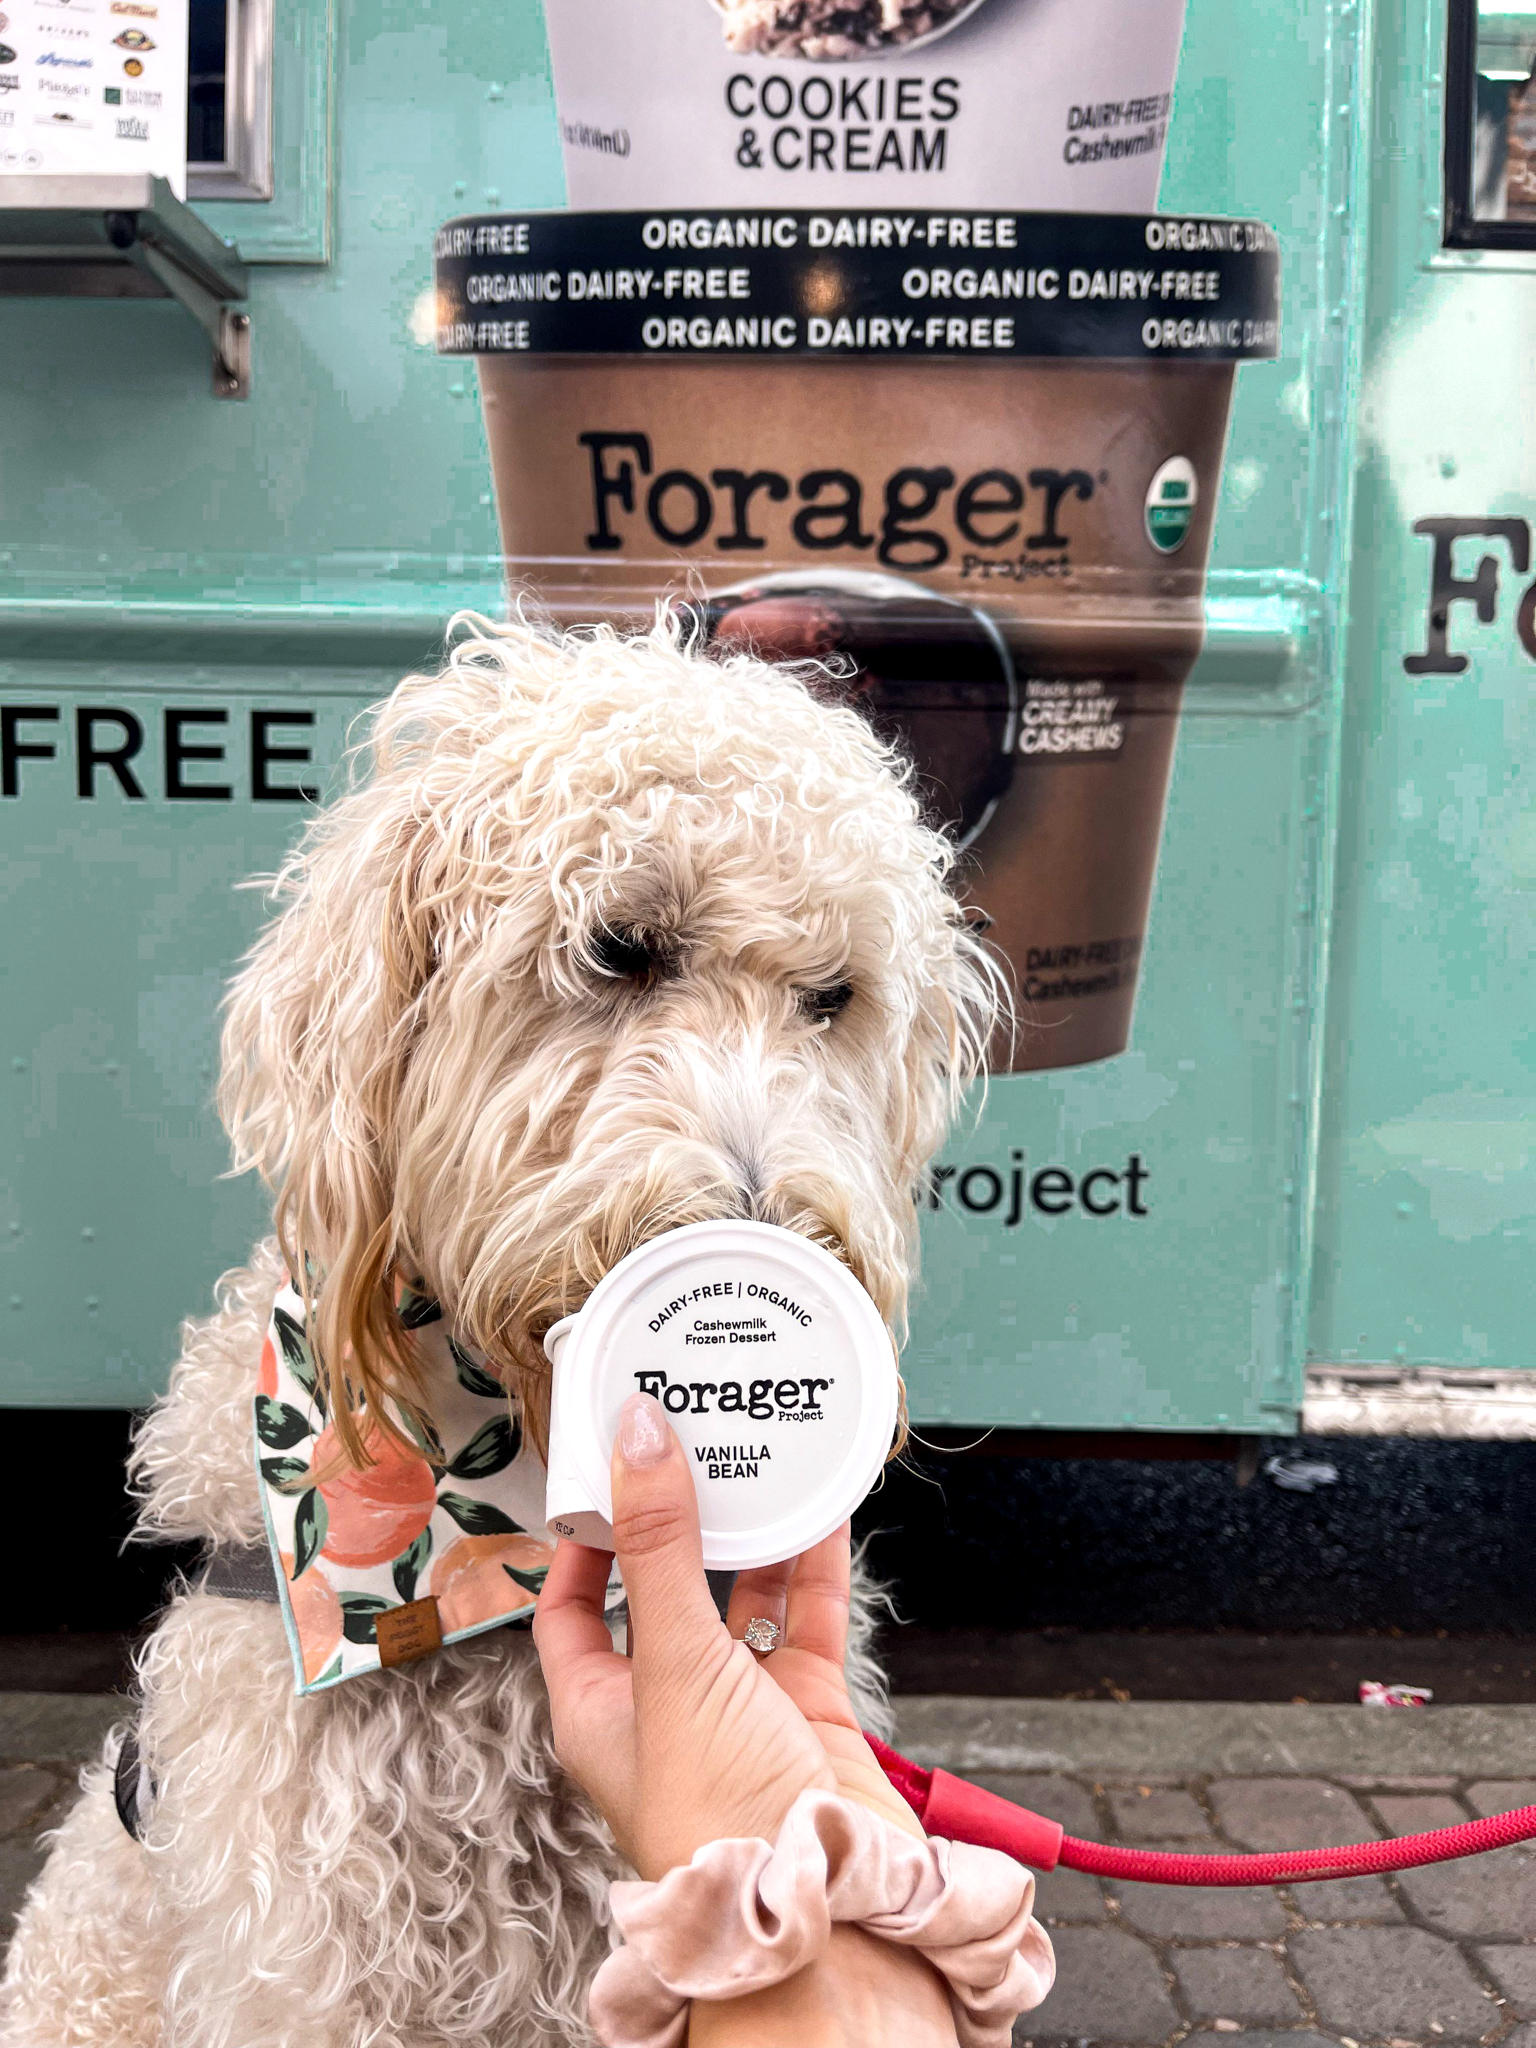 Forager's vegan ice cream sampling action in SF